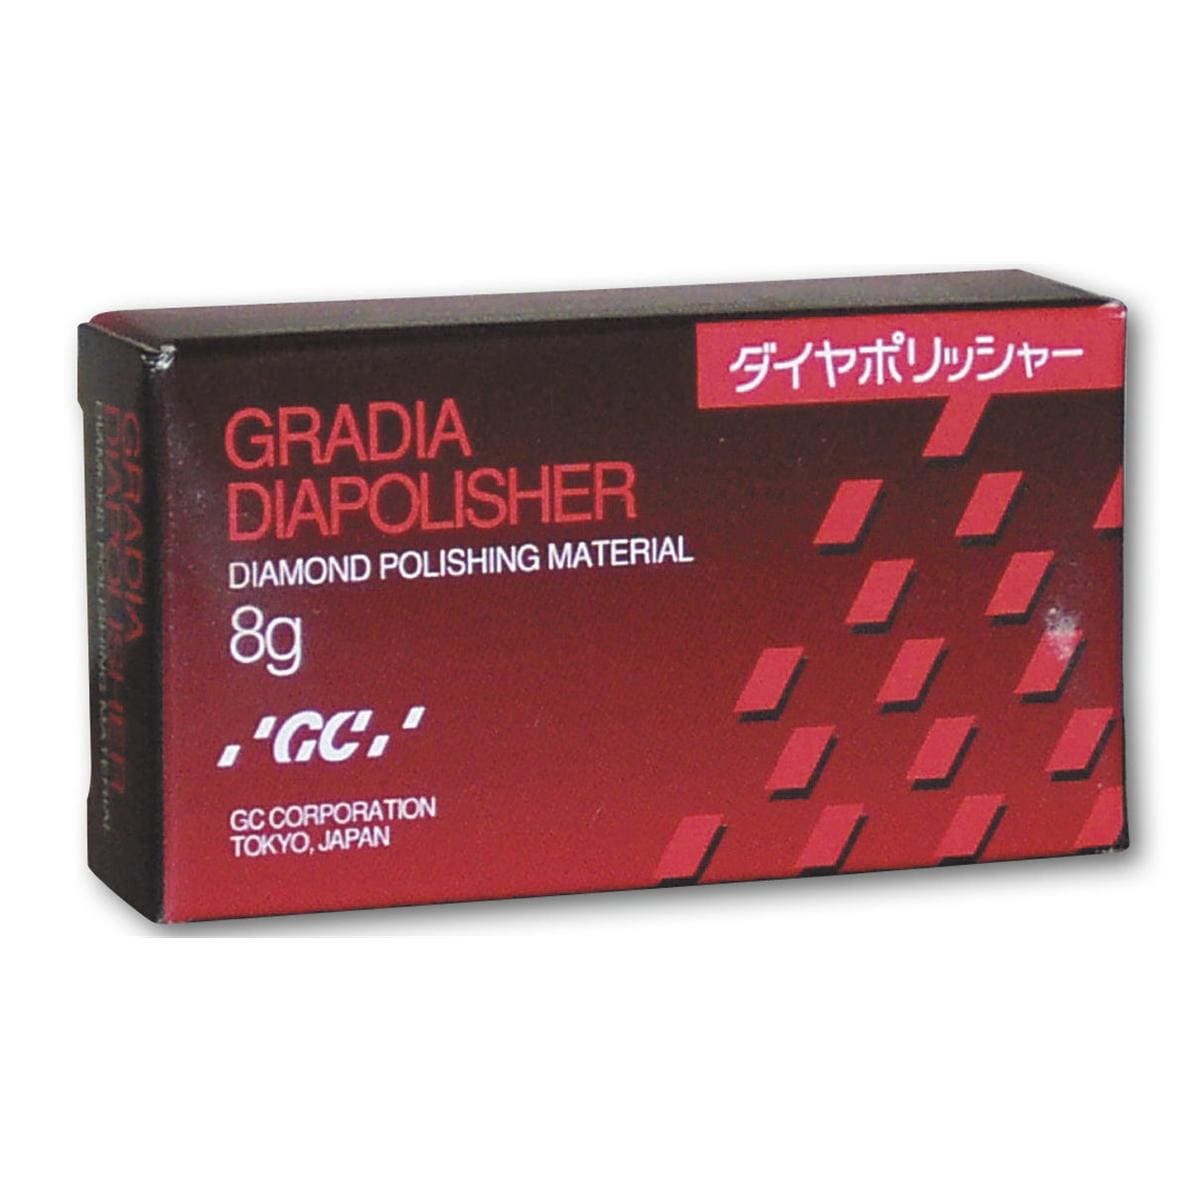 Gradia Diapolisher - Emballage, 8g